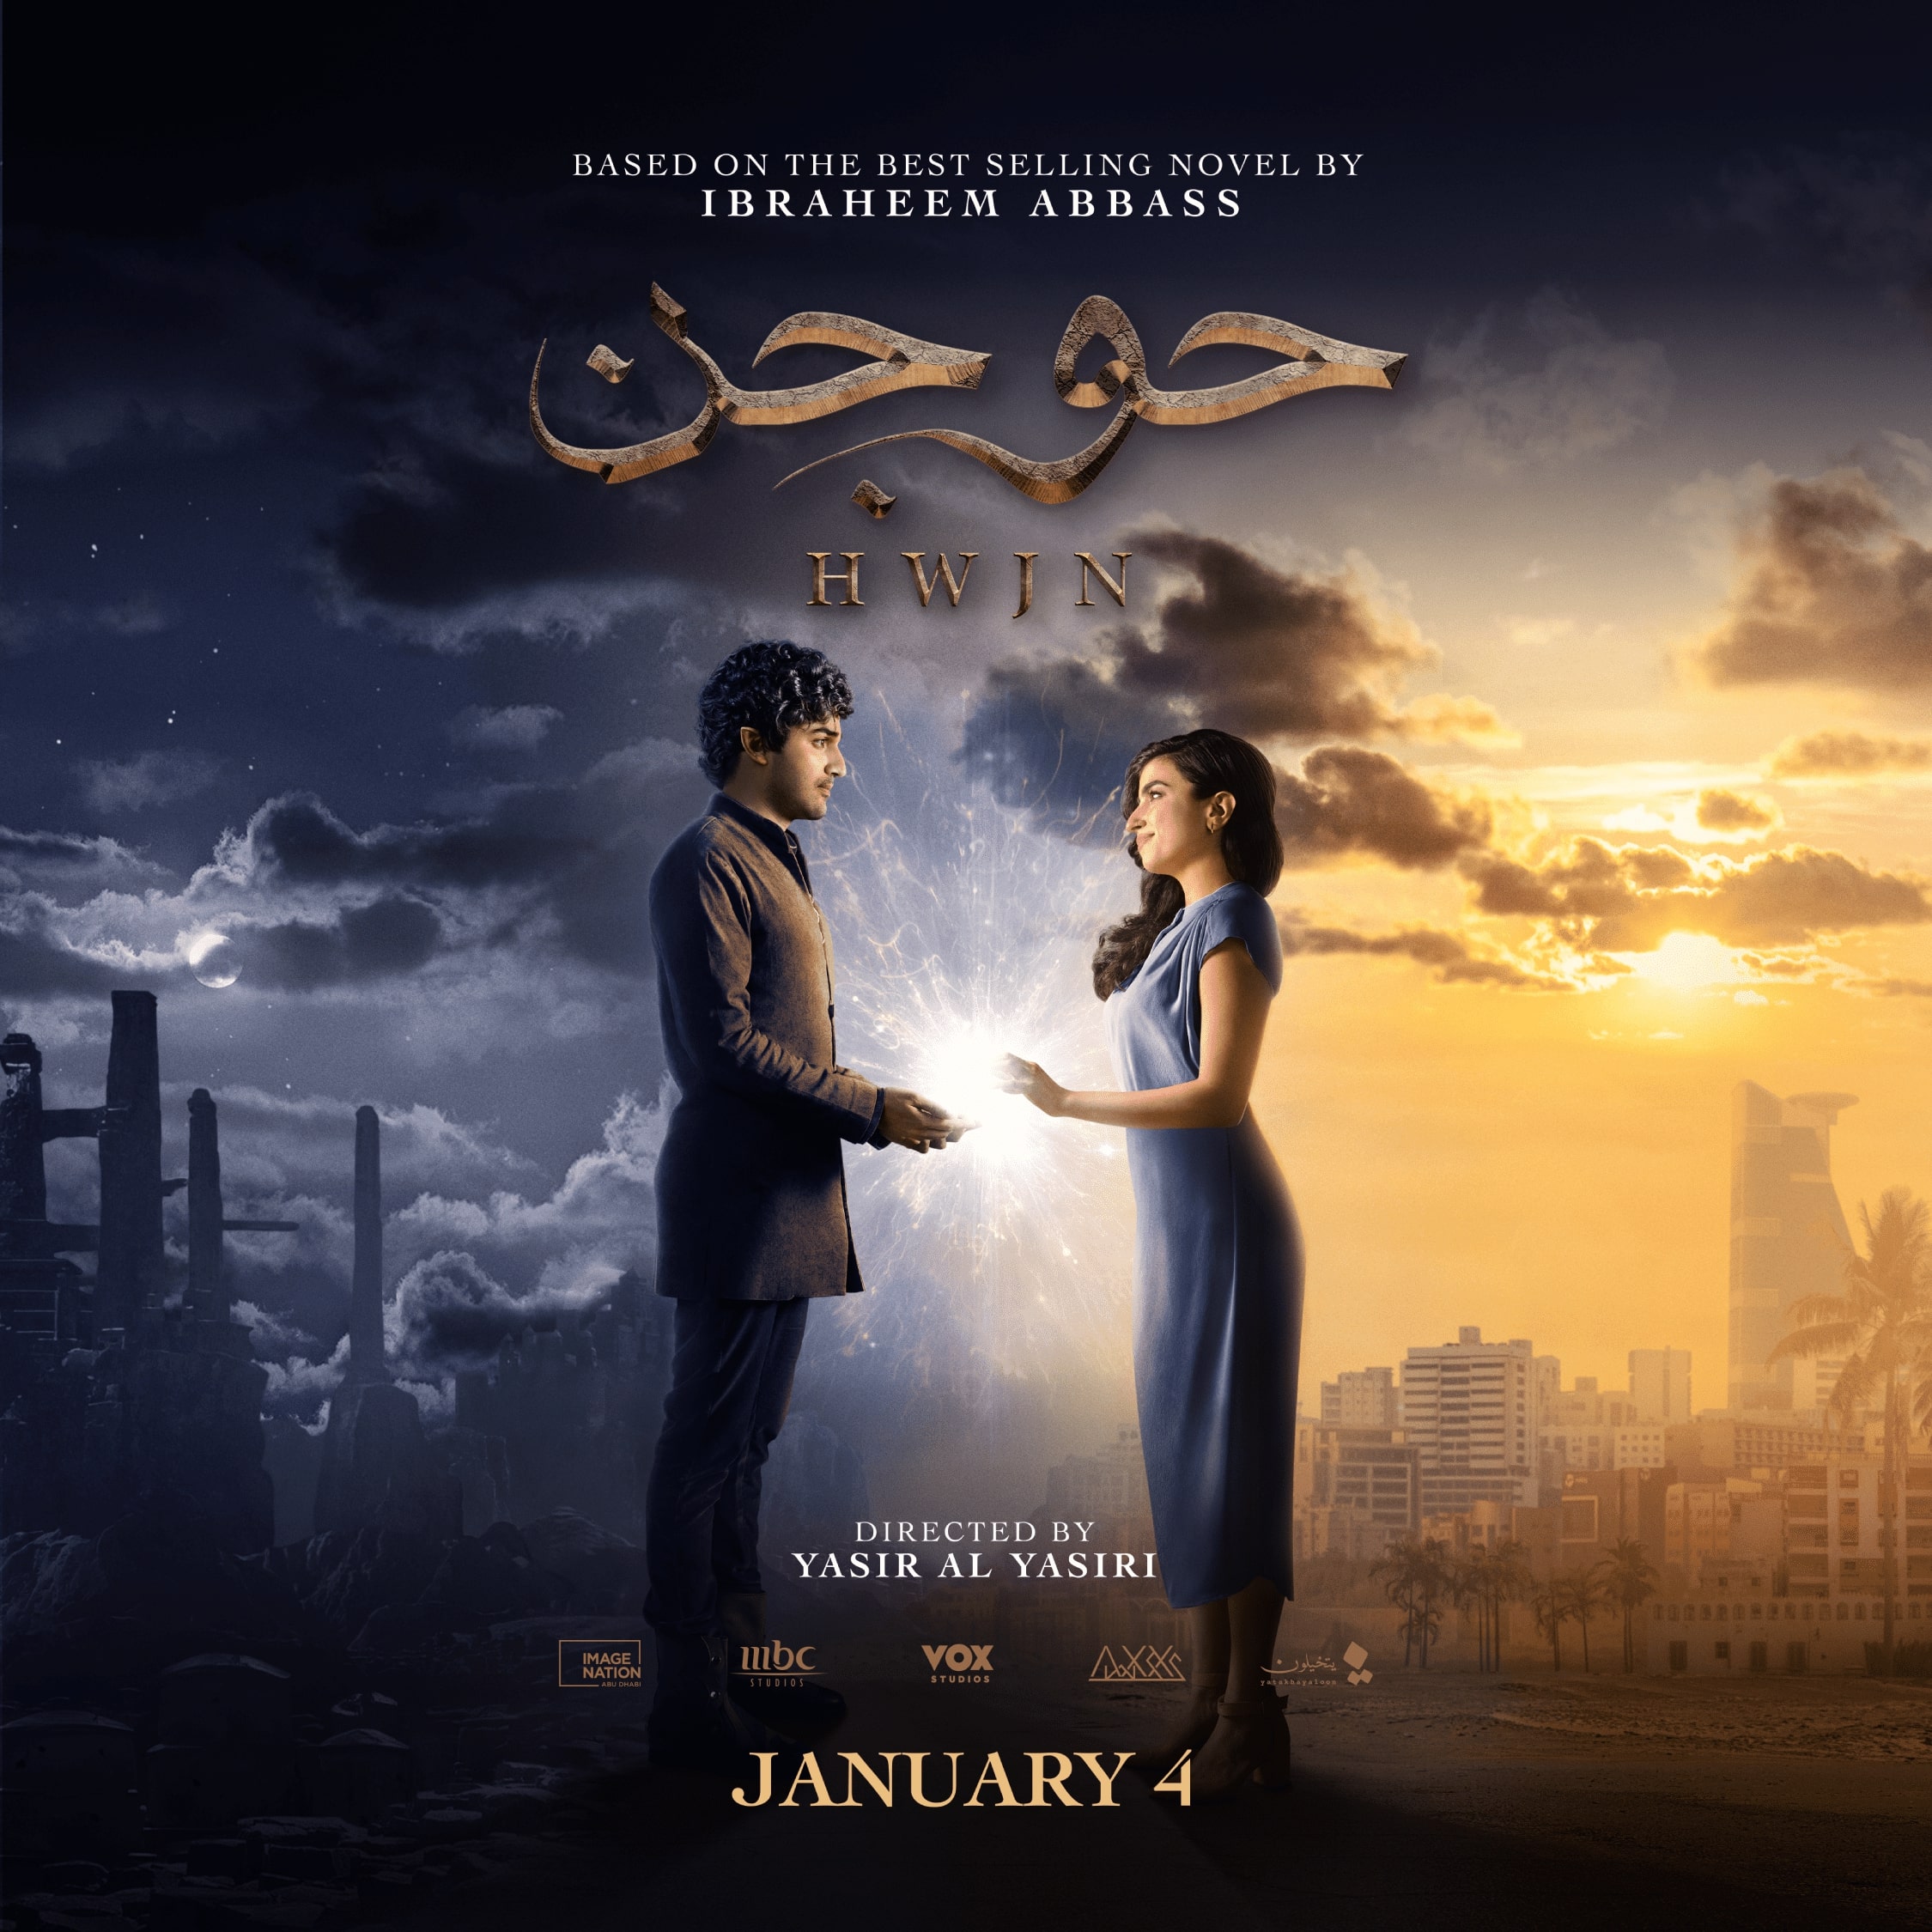 Highly anticipated fantasy epic HWJN to hit cinema screens across Saudi Arabia on January 4